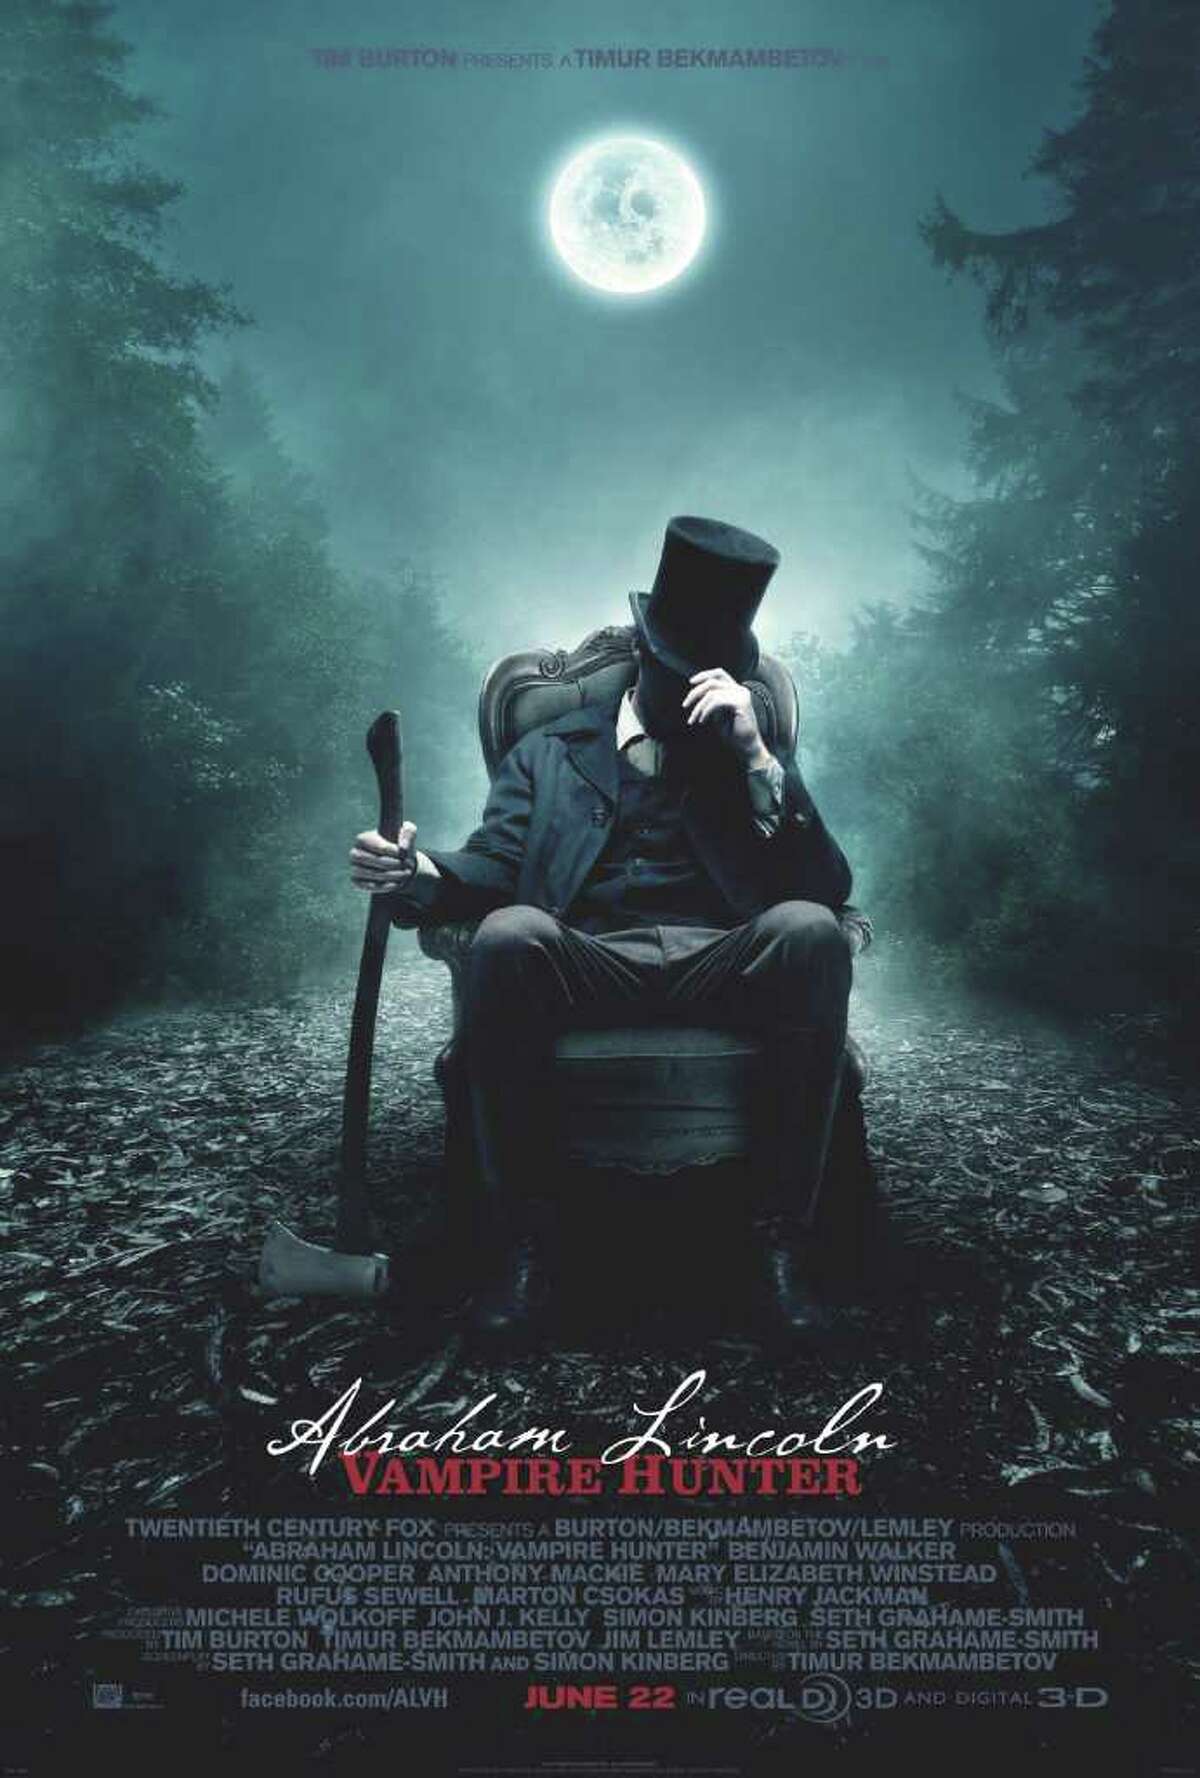 The movie poster for Abraham Lincoln Vampire Hunter